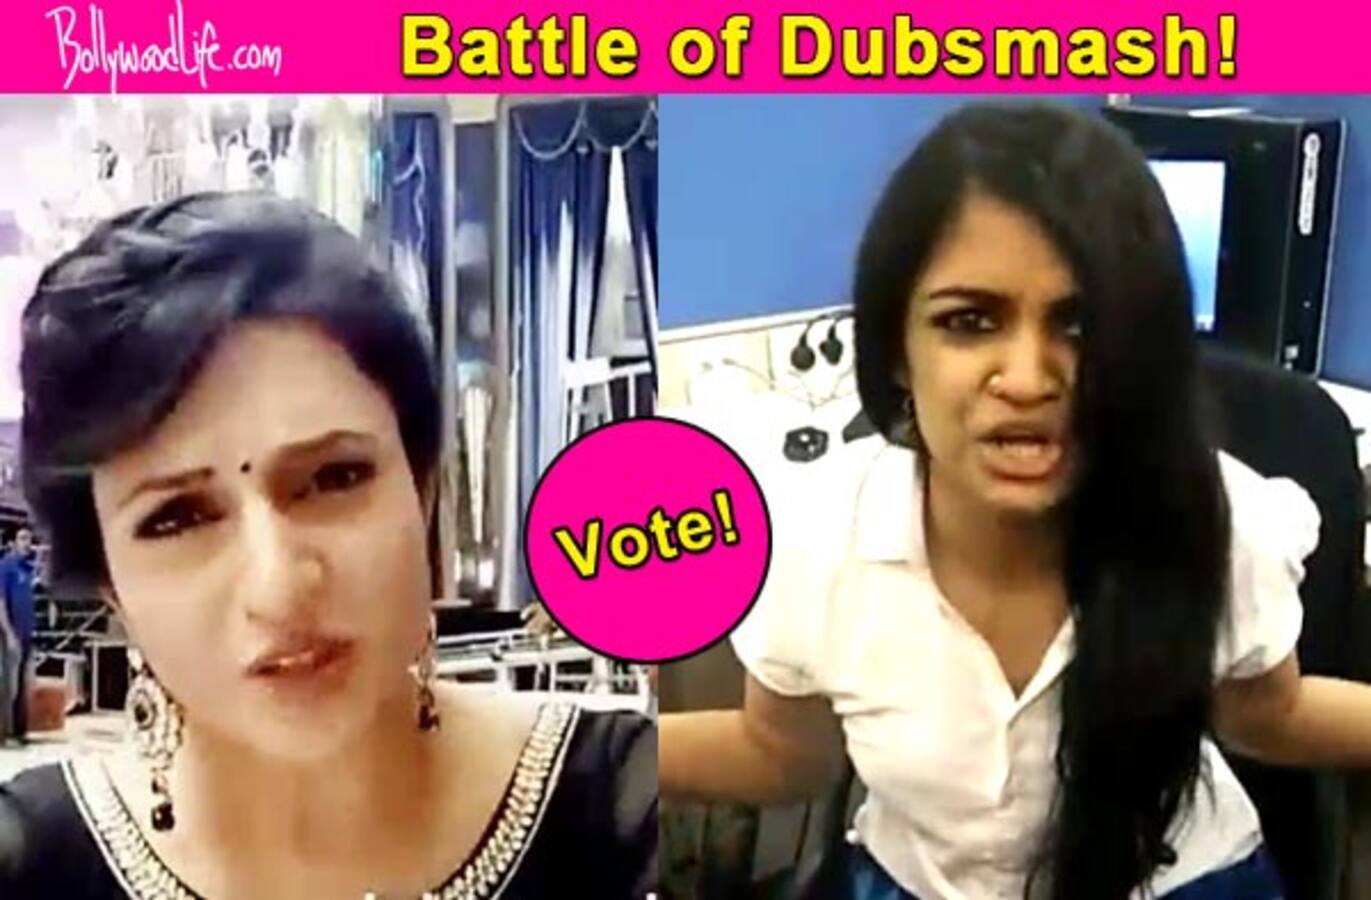 Divyanka Tripathi versus BollywoodLife's Rukmini Chopra - Whose Kareena Kapoor dubsmash video do you like better?